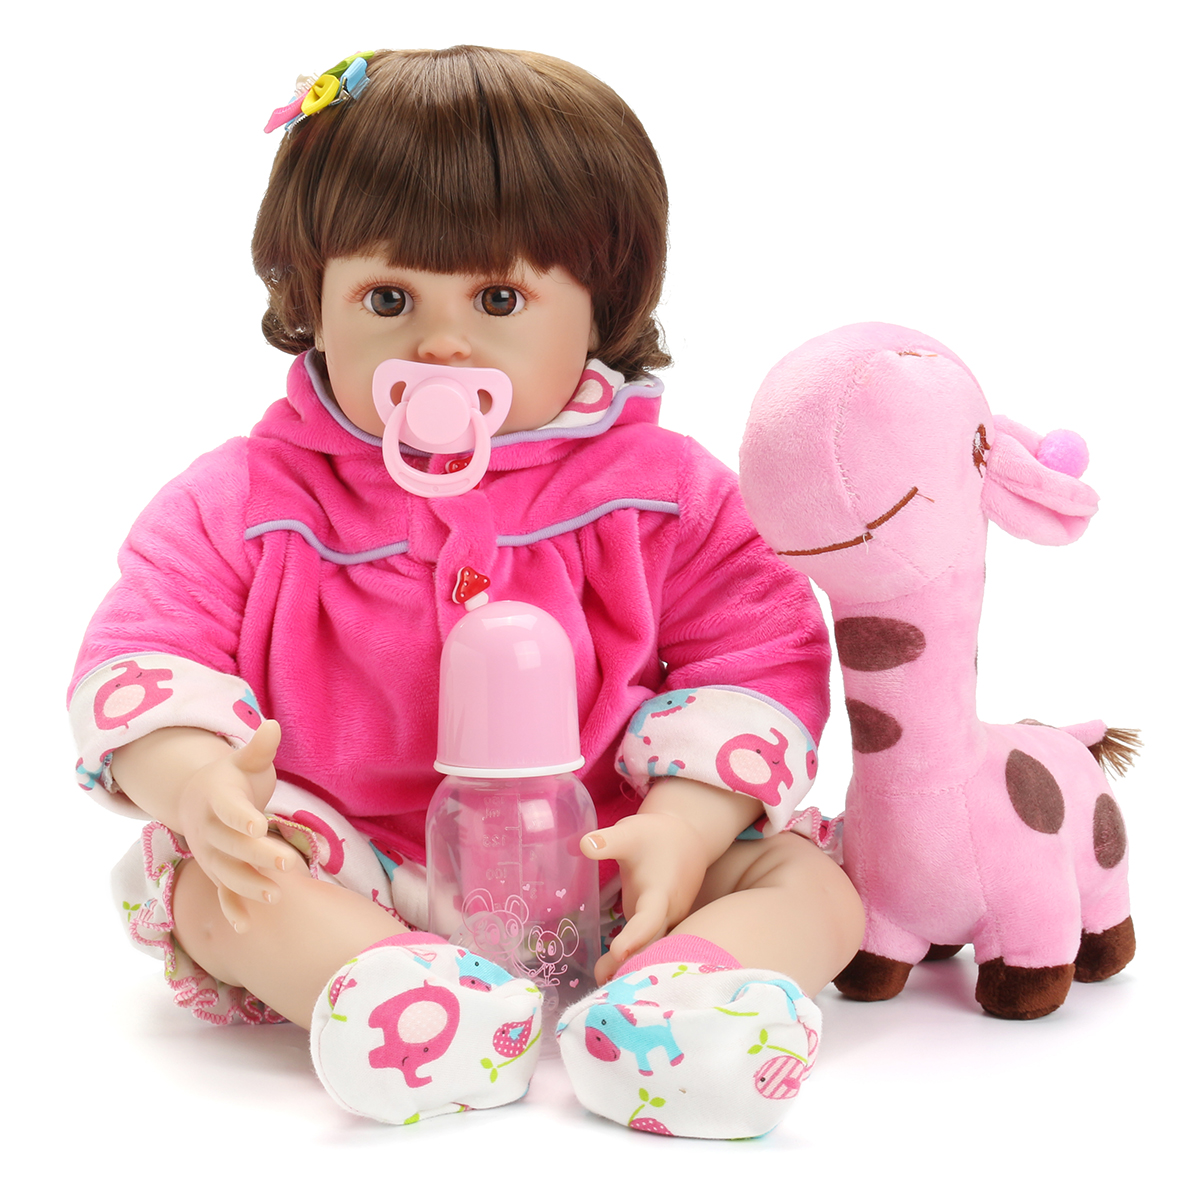 

NPK Doll 22'' Reborn Silicone Handmade Lifelike Realistic Newborn Baby Toy For Girls Birthday